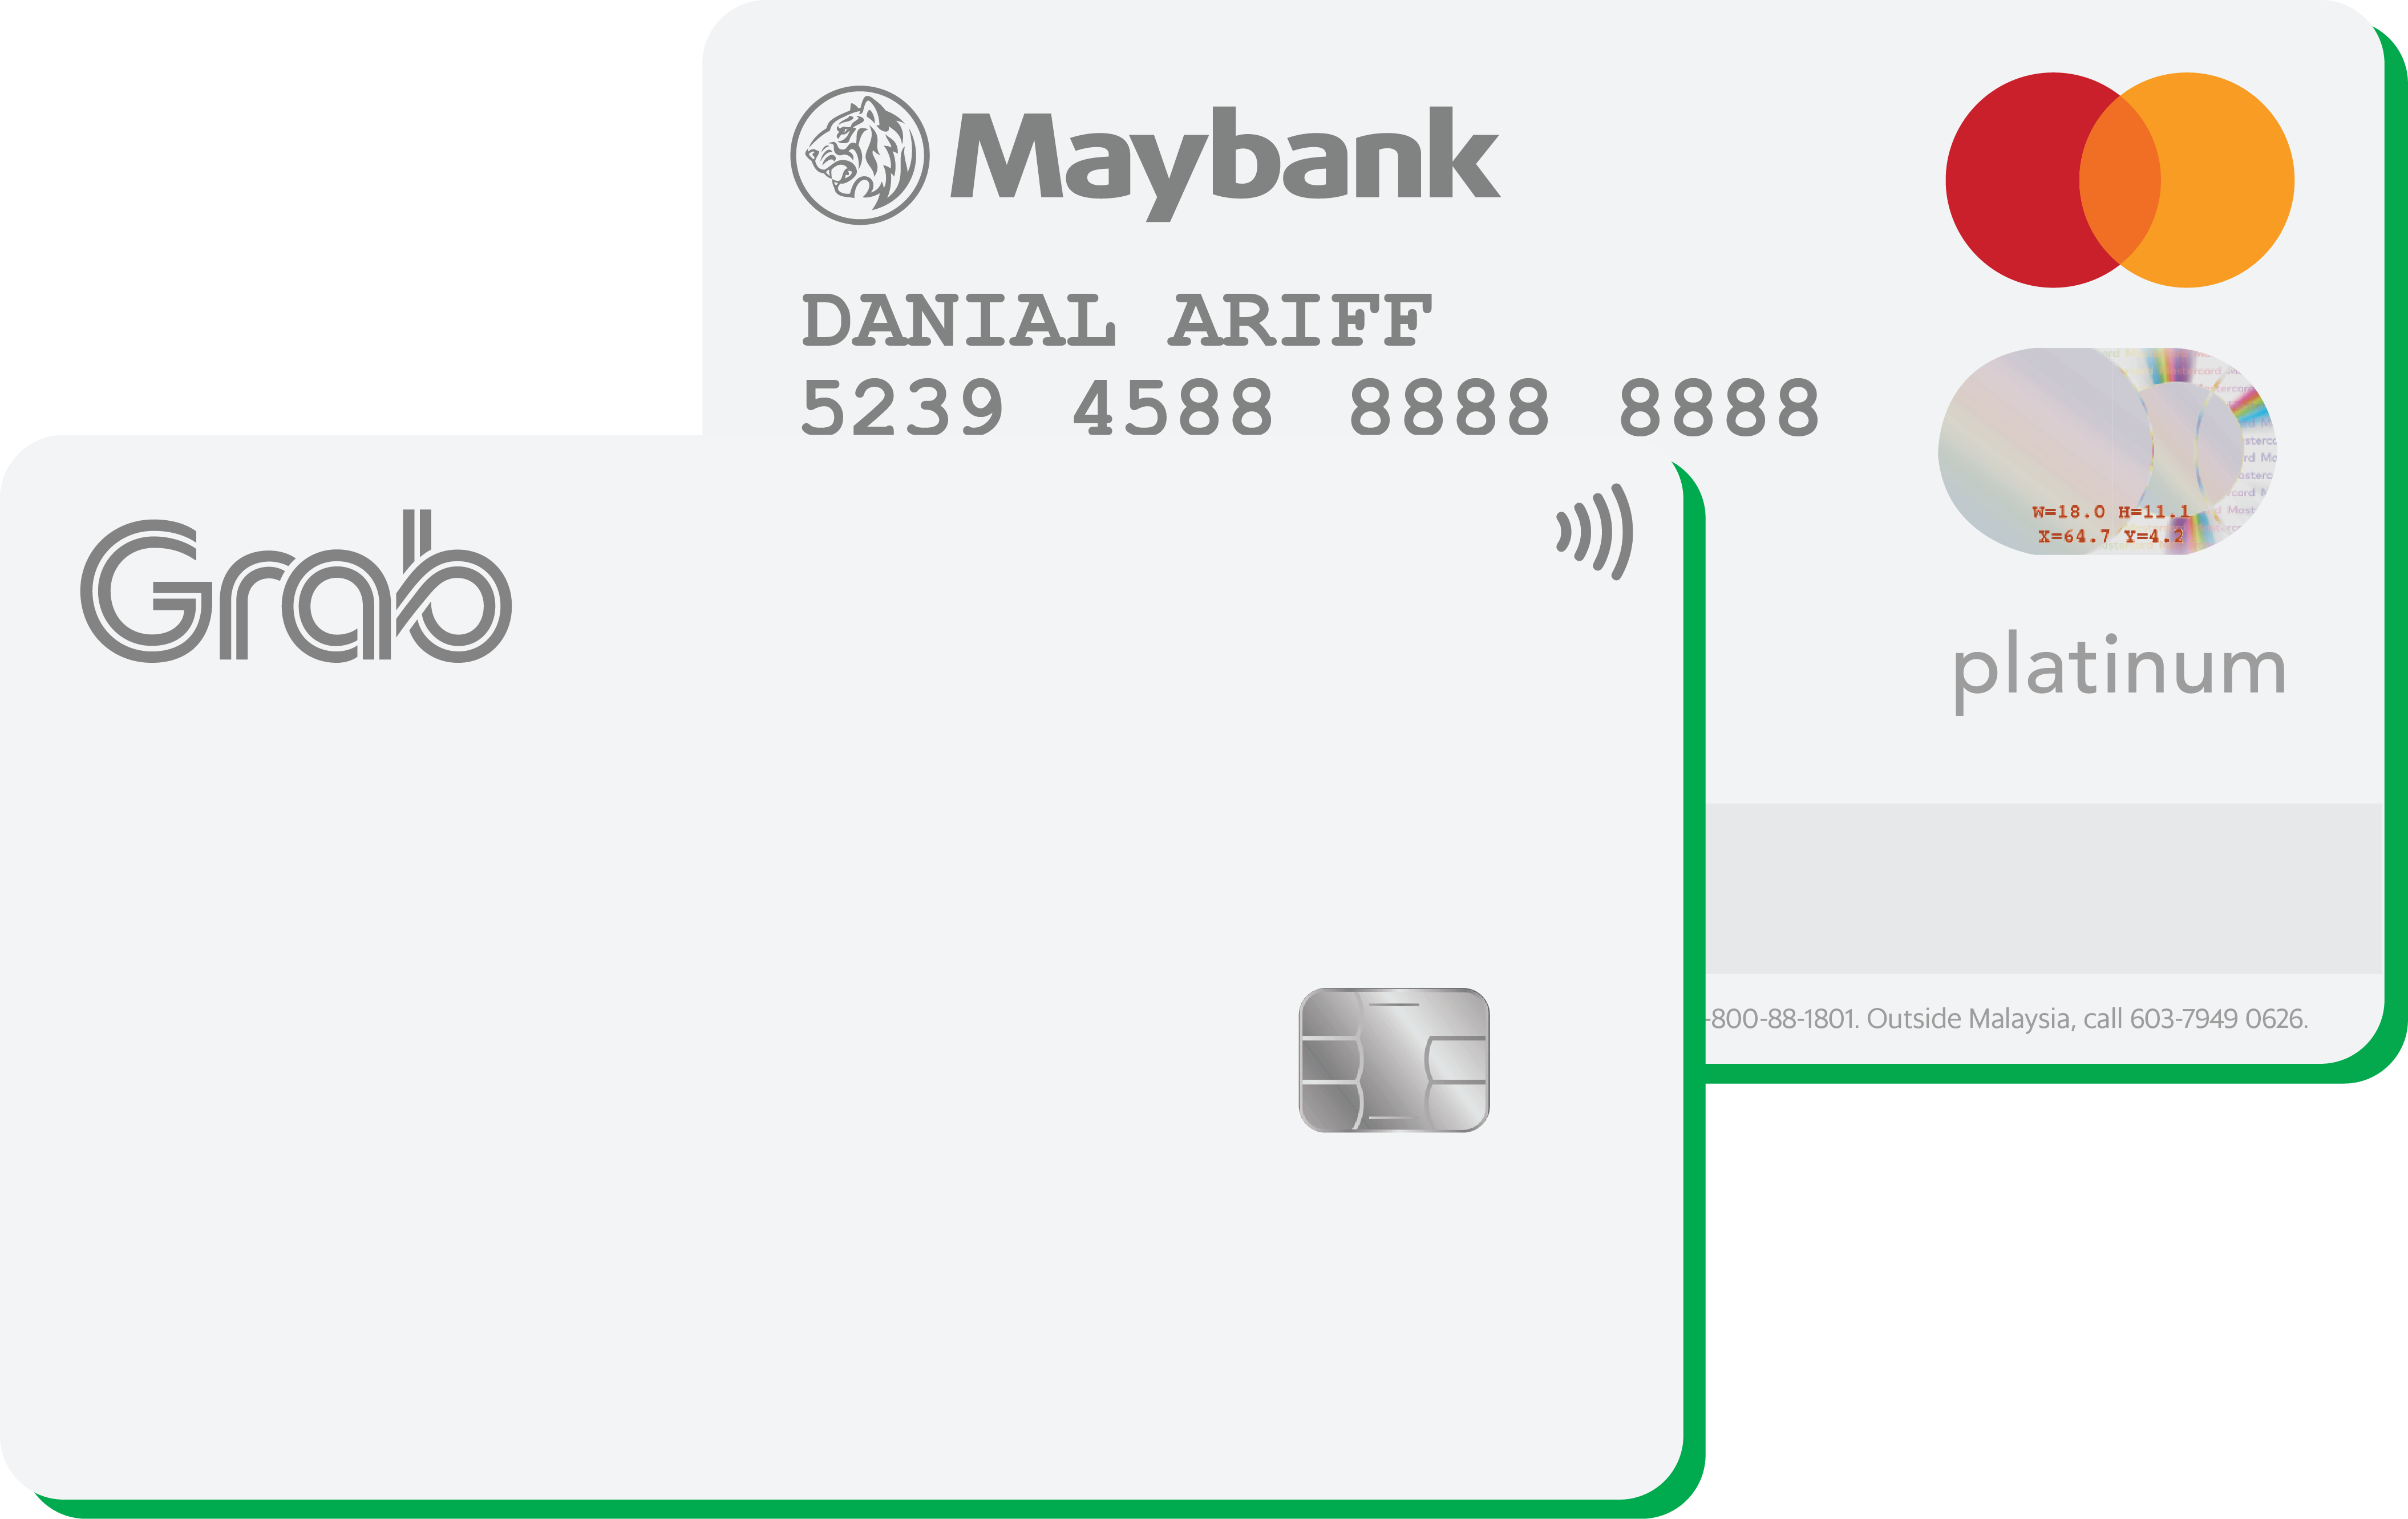 Maybank Grab Mastercard Platinum